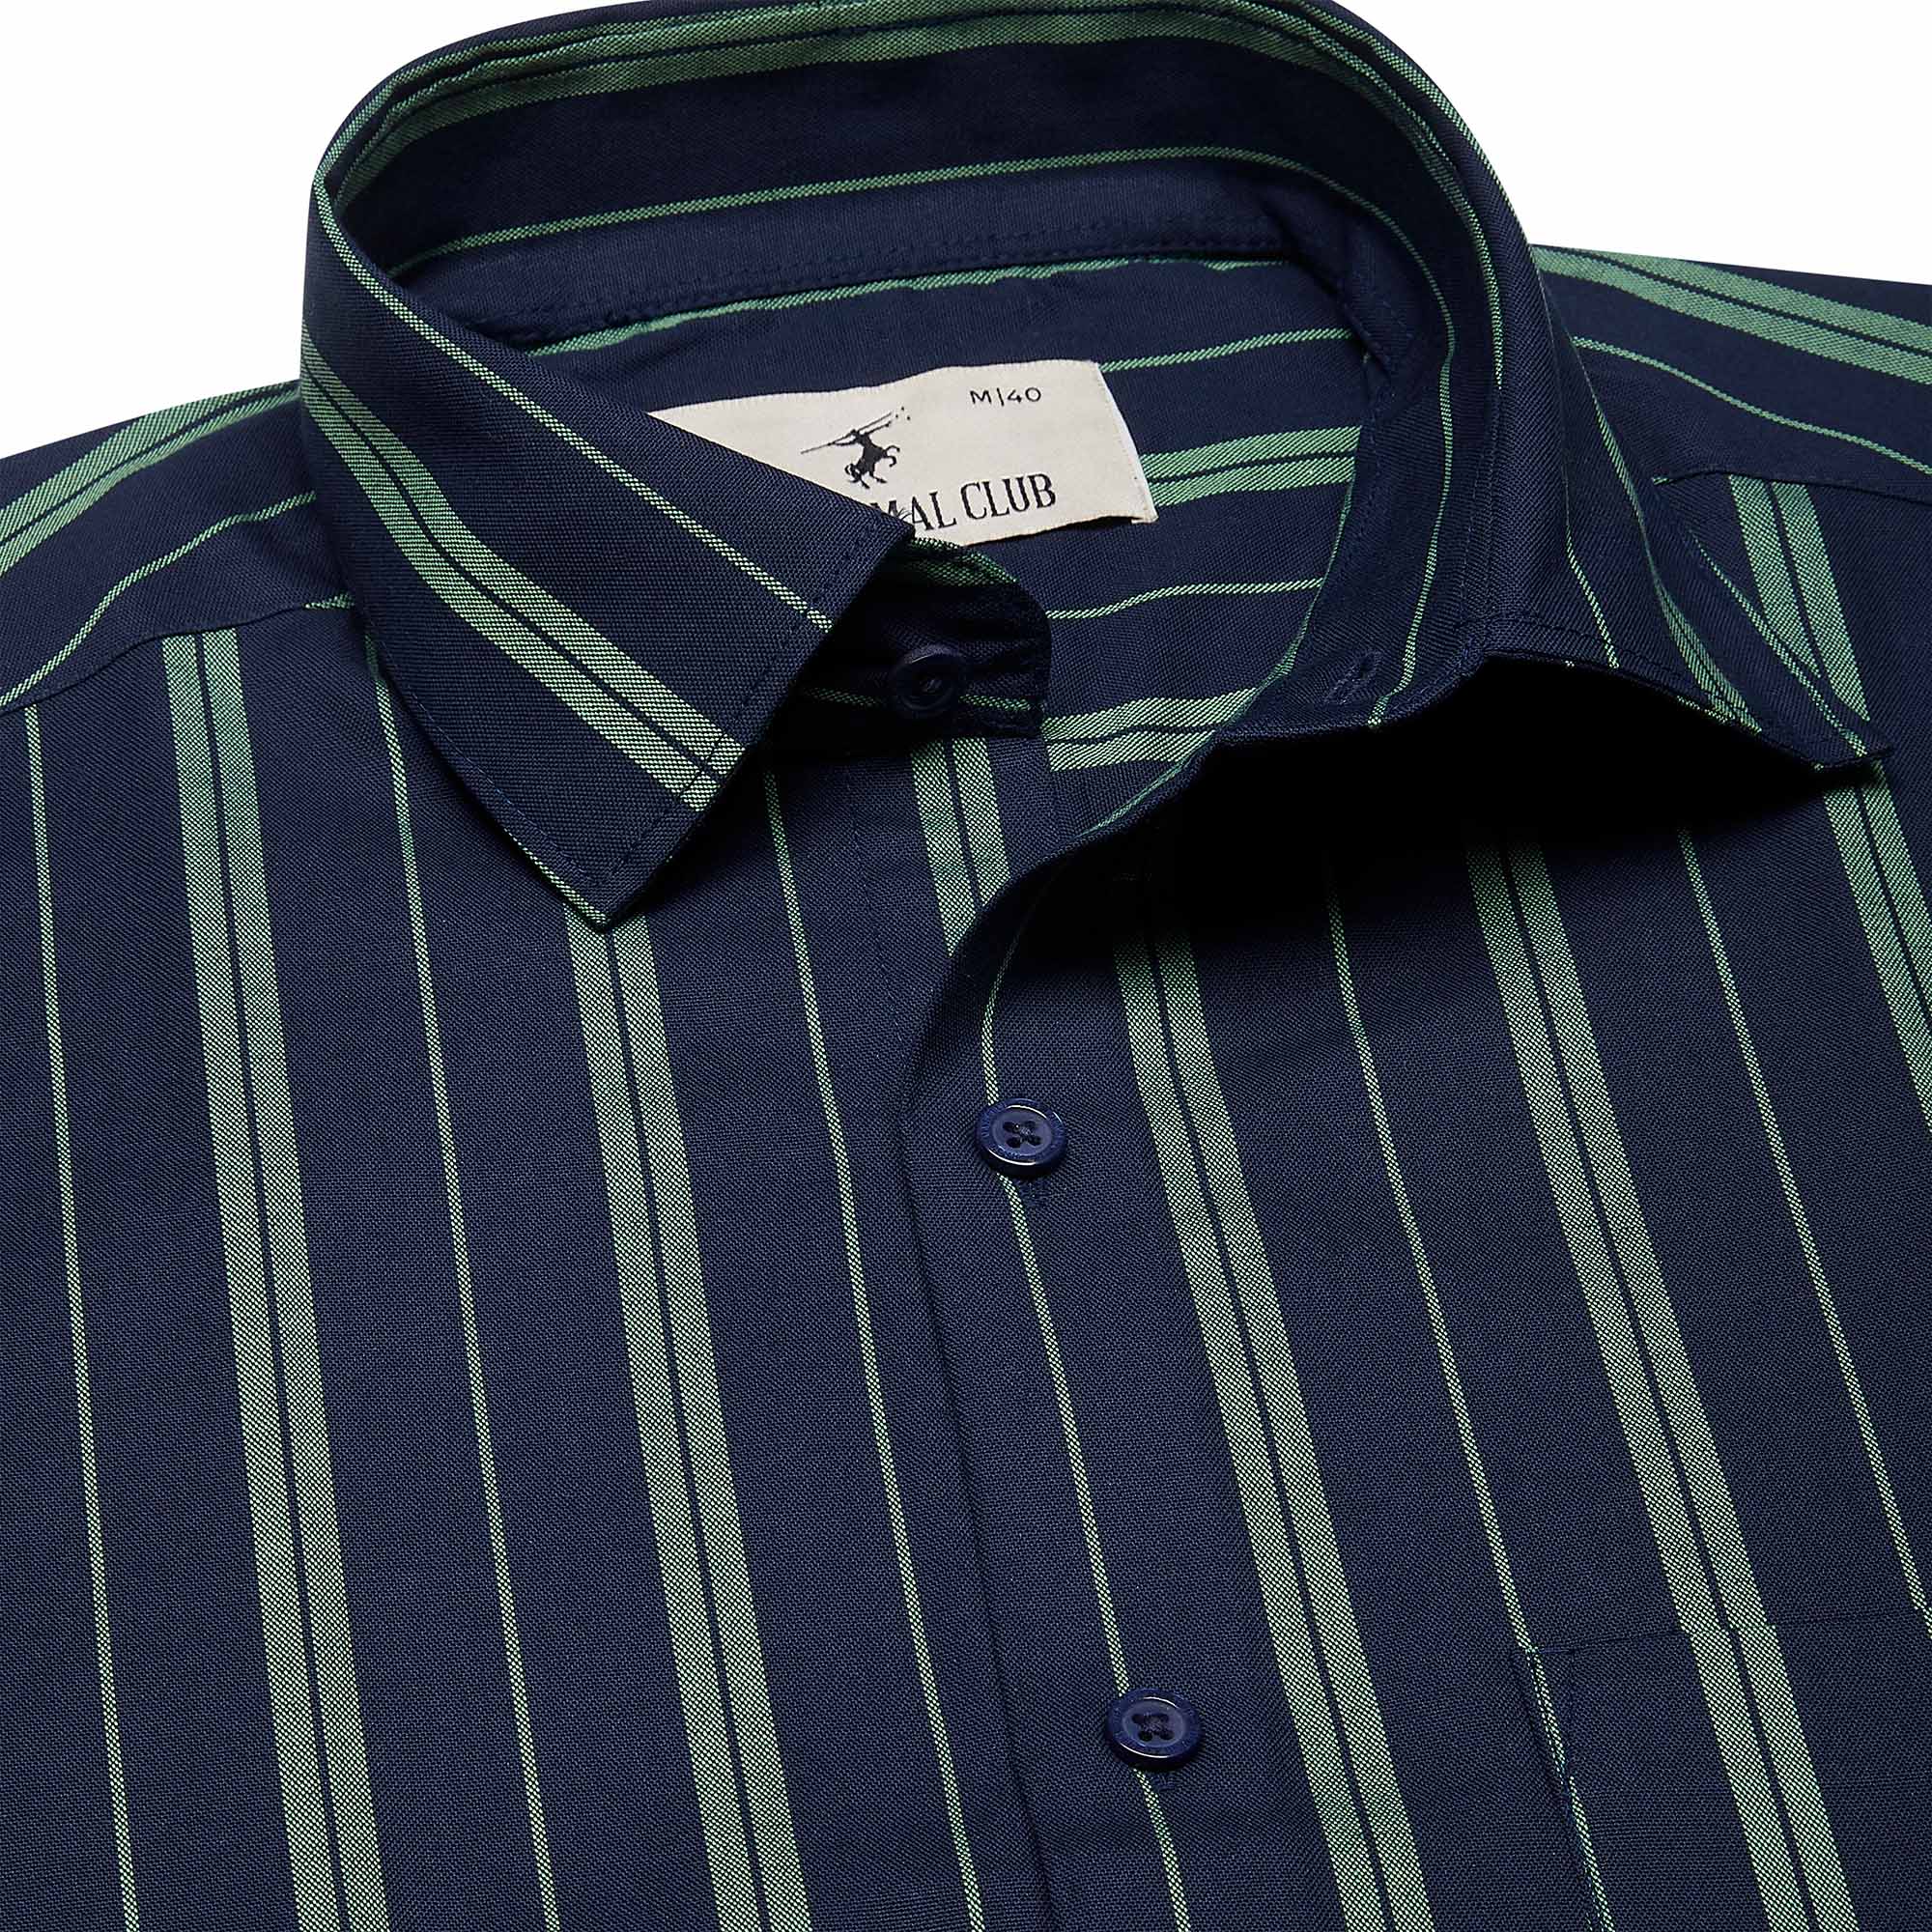 Regal Green Stripe Shirt In Navy Blue - The Formal Club